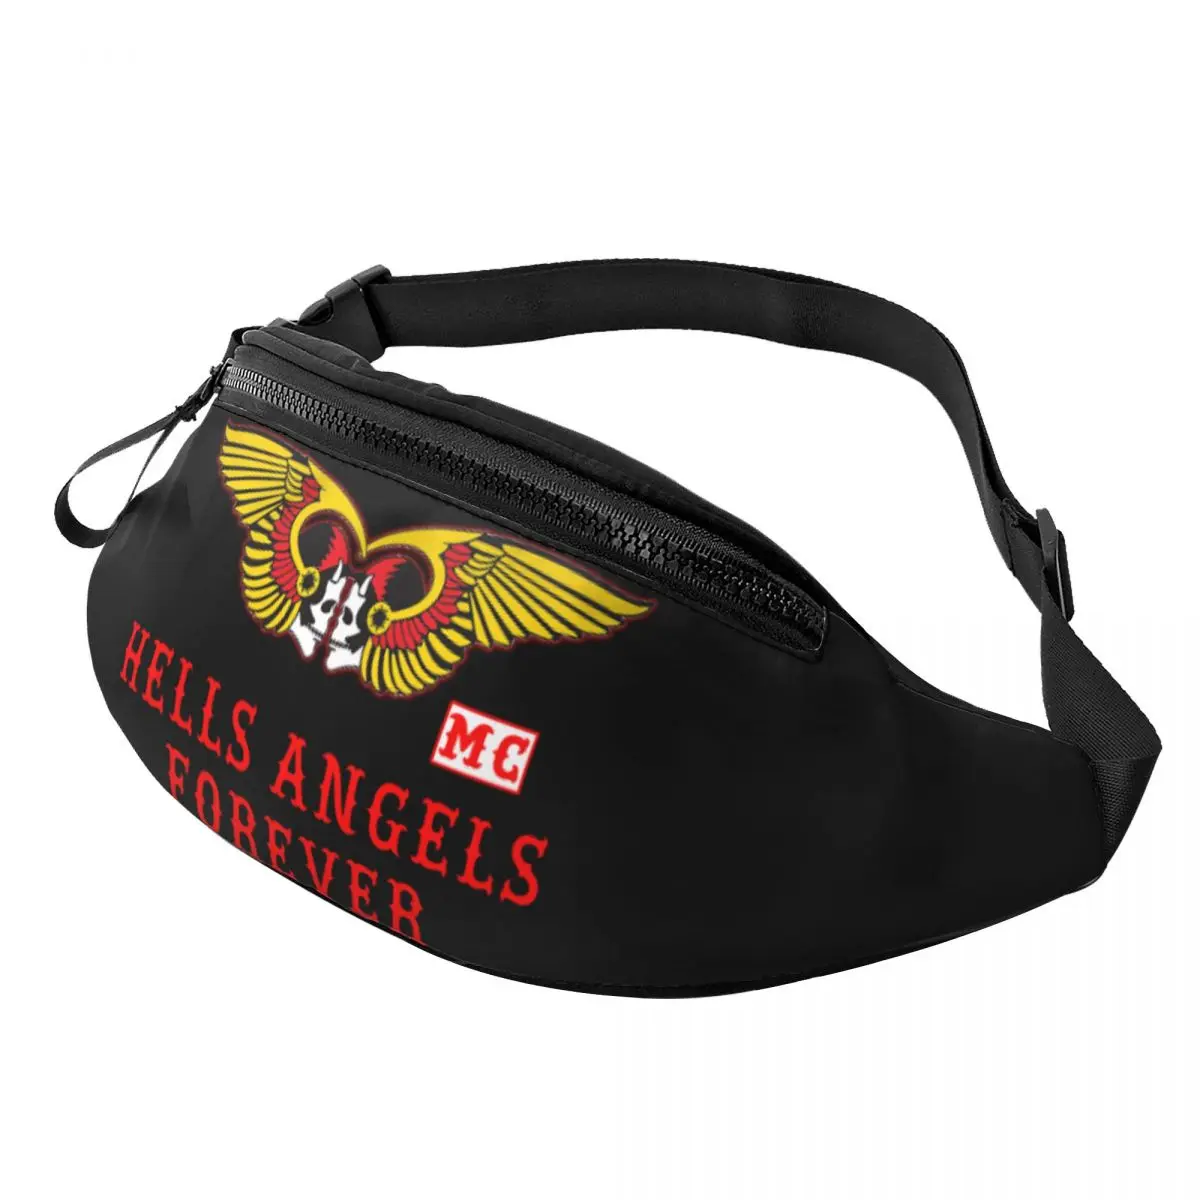 

Hells Angels Forever Strap Bag Accessories Trendy For Unisex Brotherhood Motorcycle Club Dumpling Bags